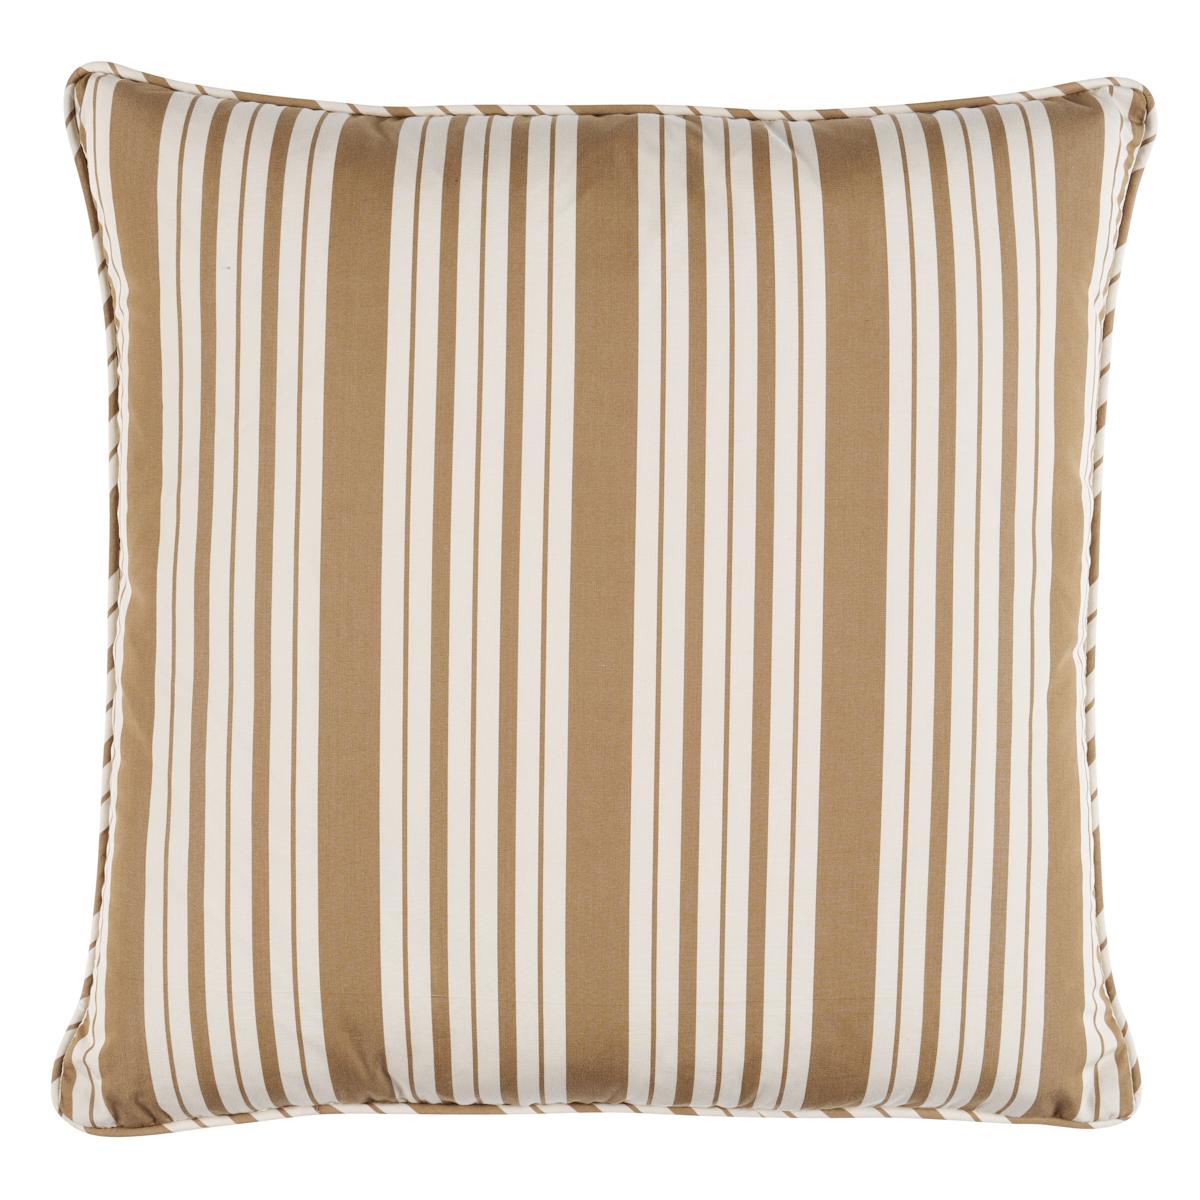 Markie Stripe Pillow in Neutral 18 x18"